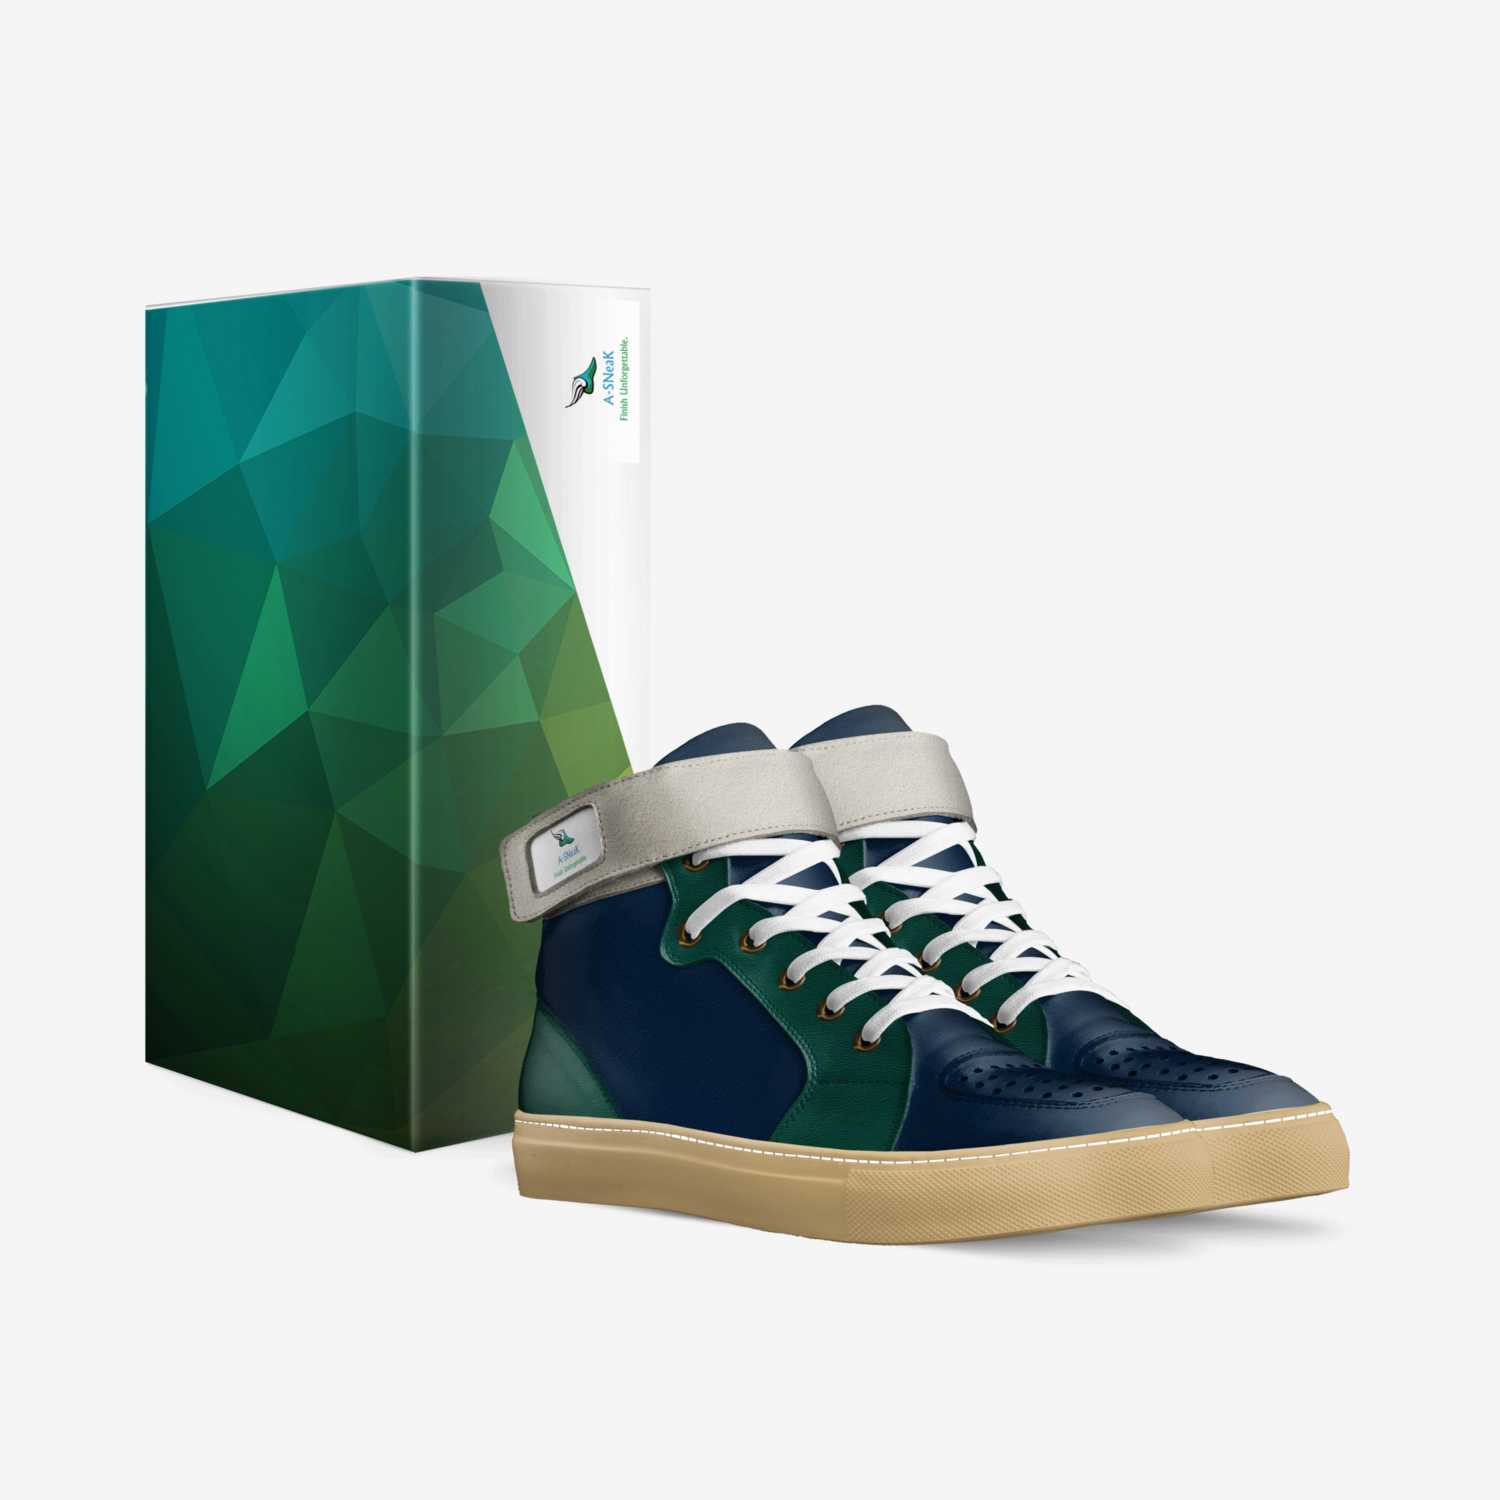 A-SNeaK custom made in Italy shoes by Arjun Sundaram | Box view